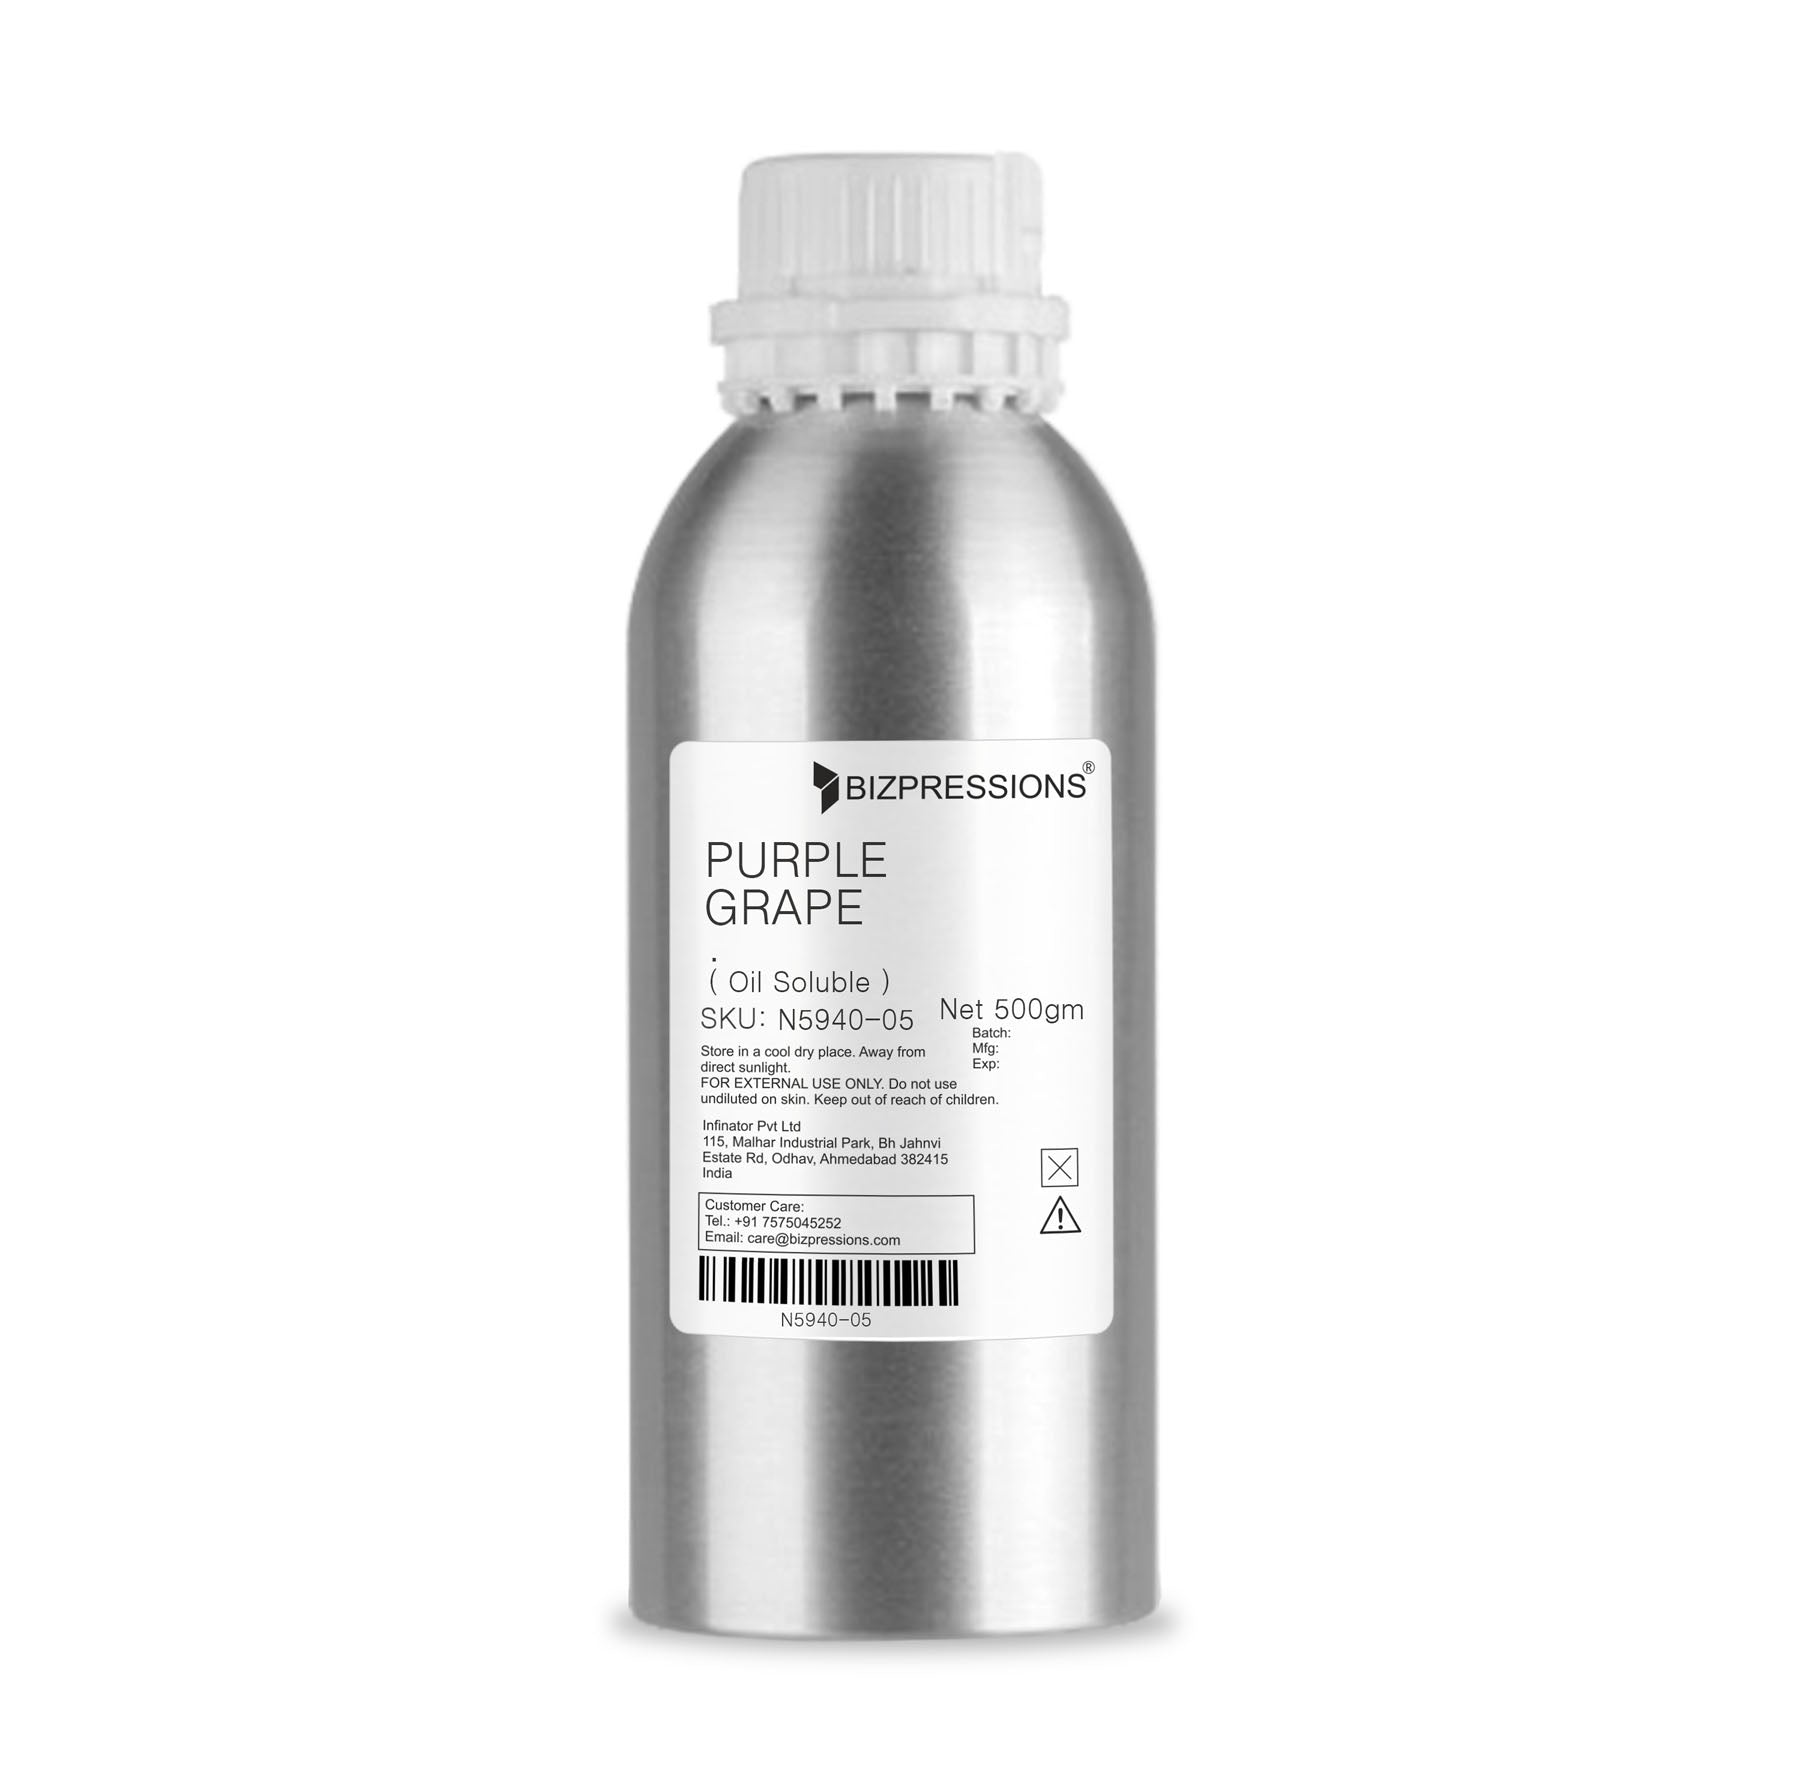 PURPLE GRAPE - Fragrance ( Oil Soluble ) - 500 gm